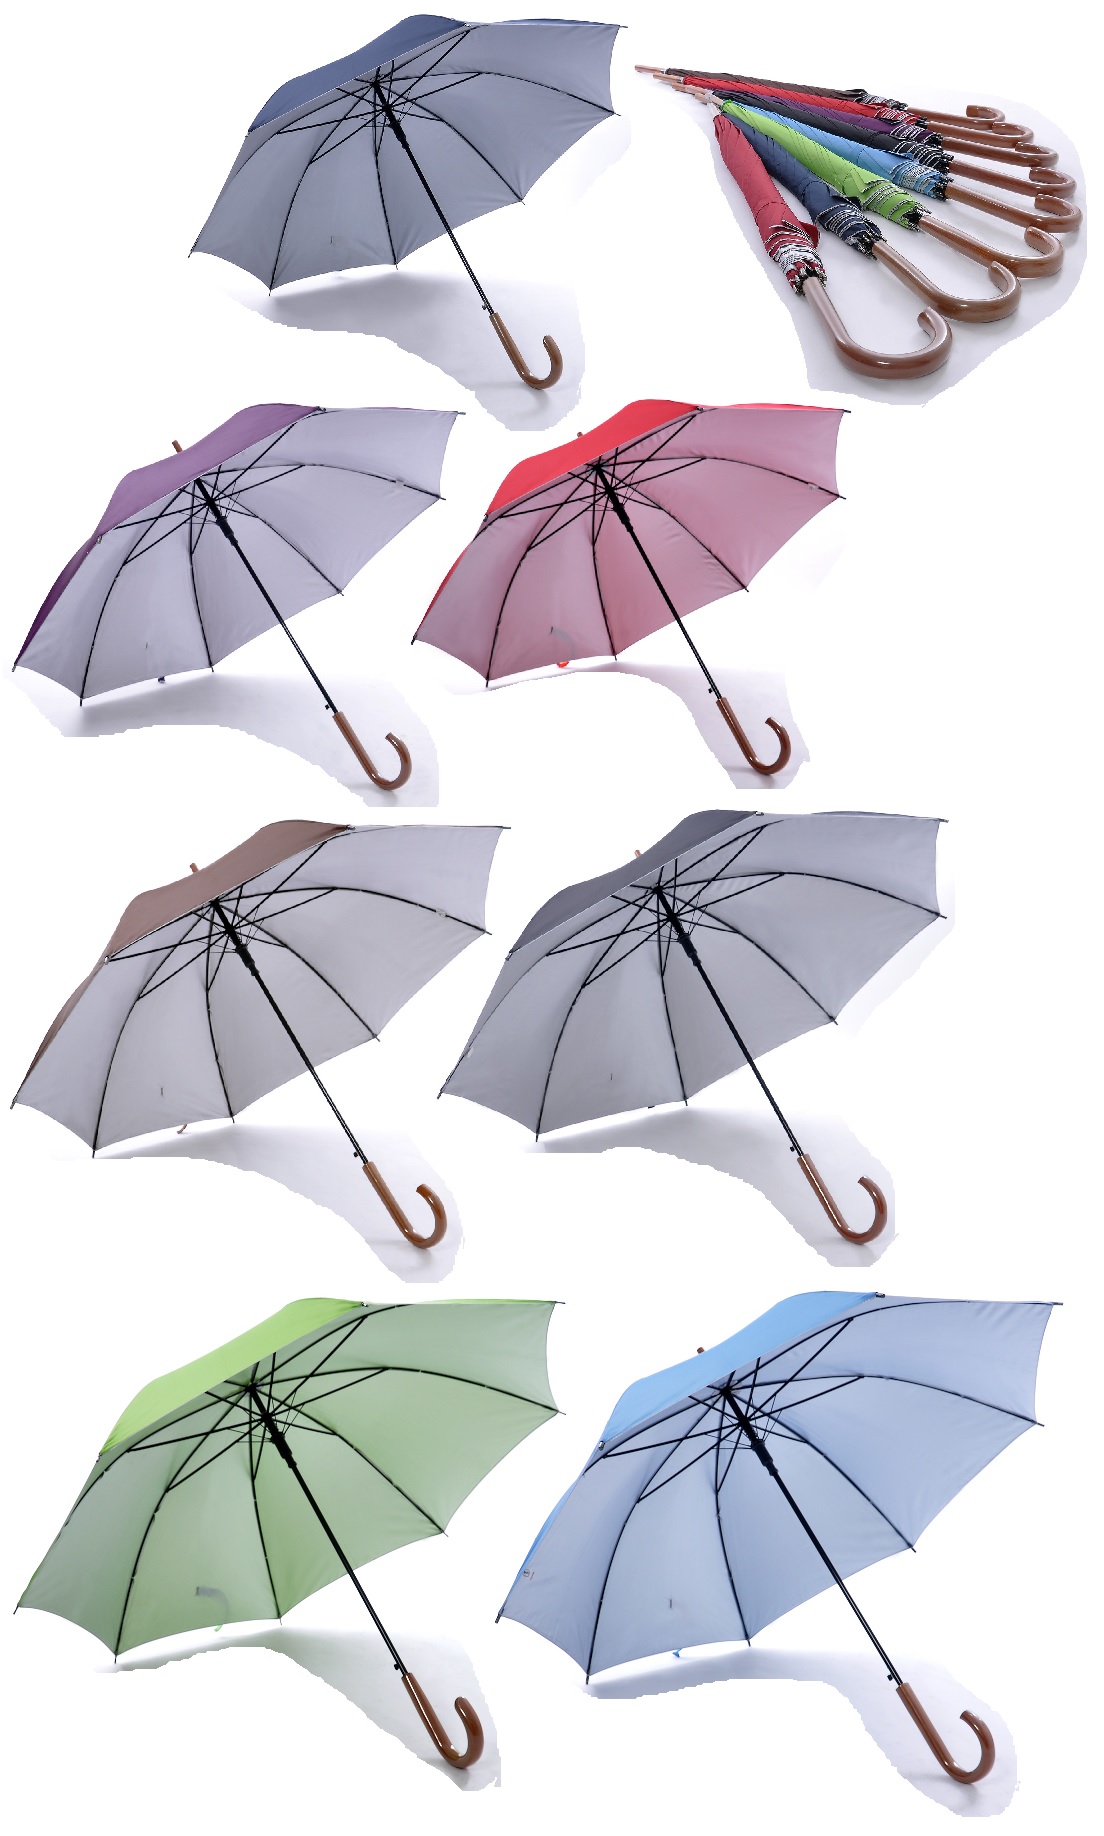 24inch Umbrella with UV Coating on interior panels